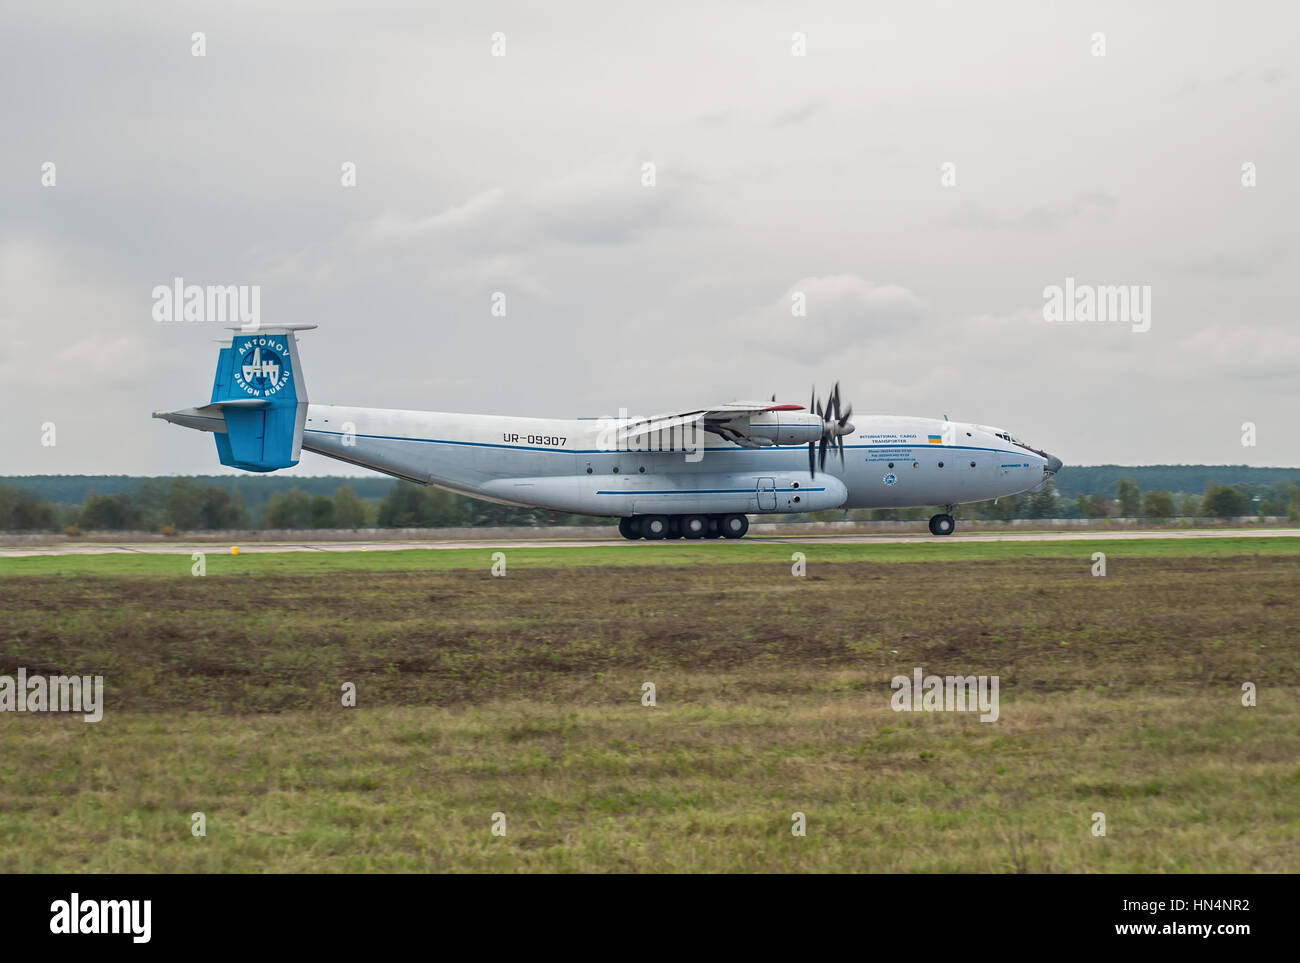 Kiev Region, Ukraine - September 25, 2008: Antonov An-22 turboprop cargo plane is taking off from the runway Stock Photo